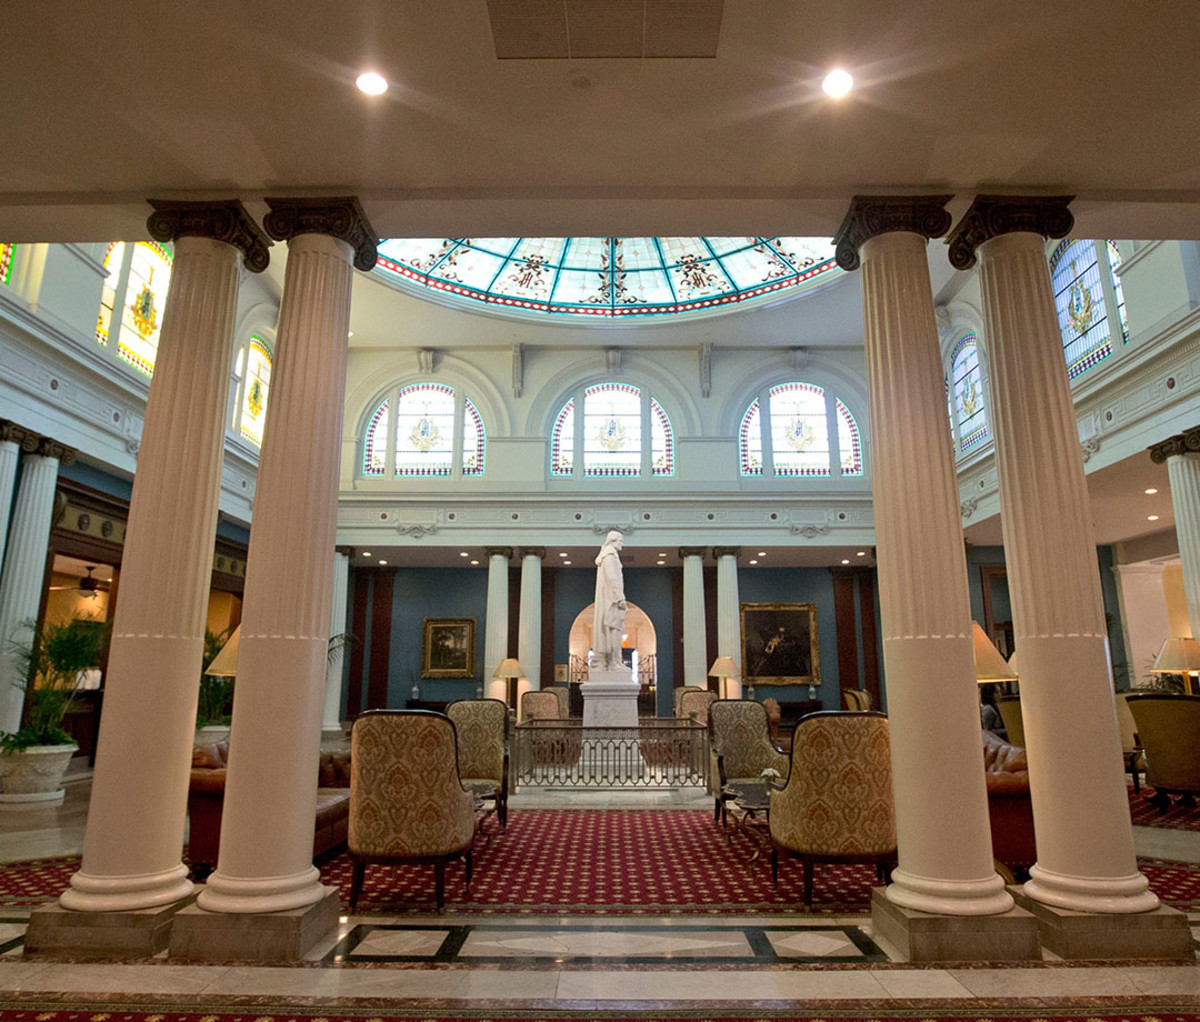 The main lobby of Richmond's Jefferson Hotel